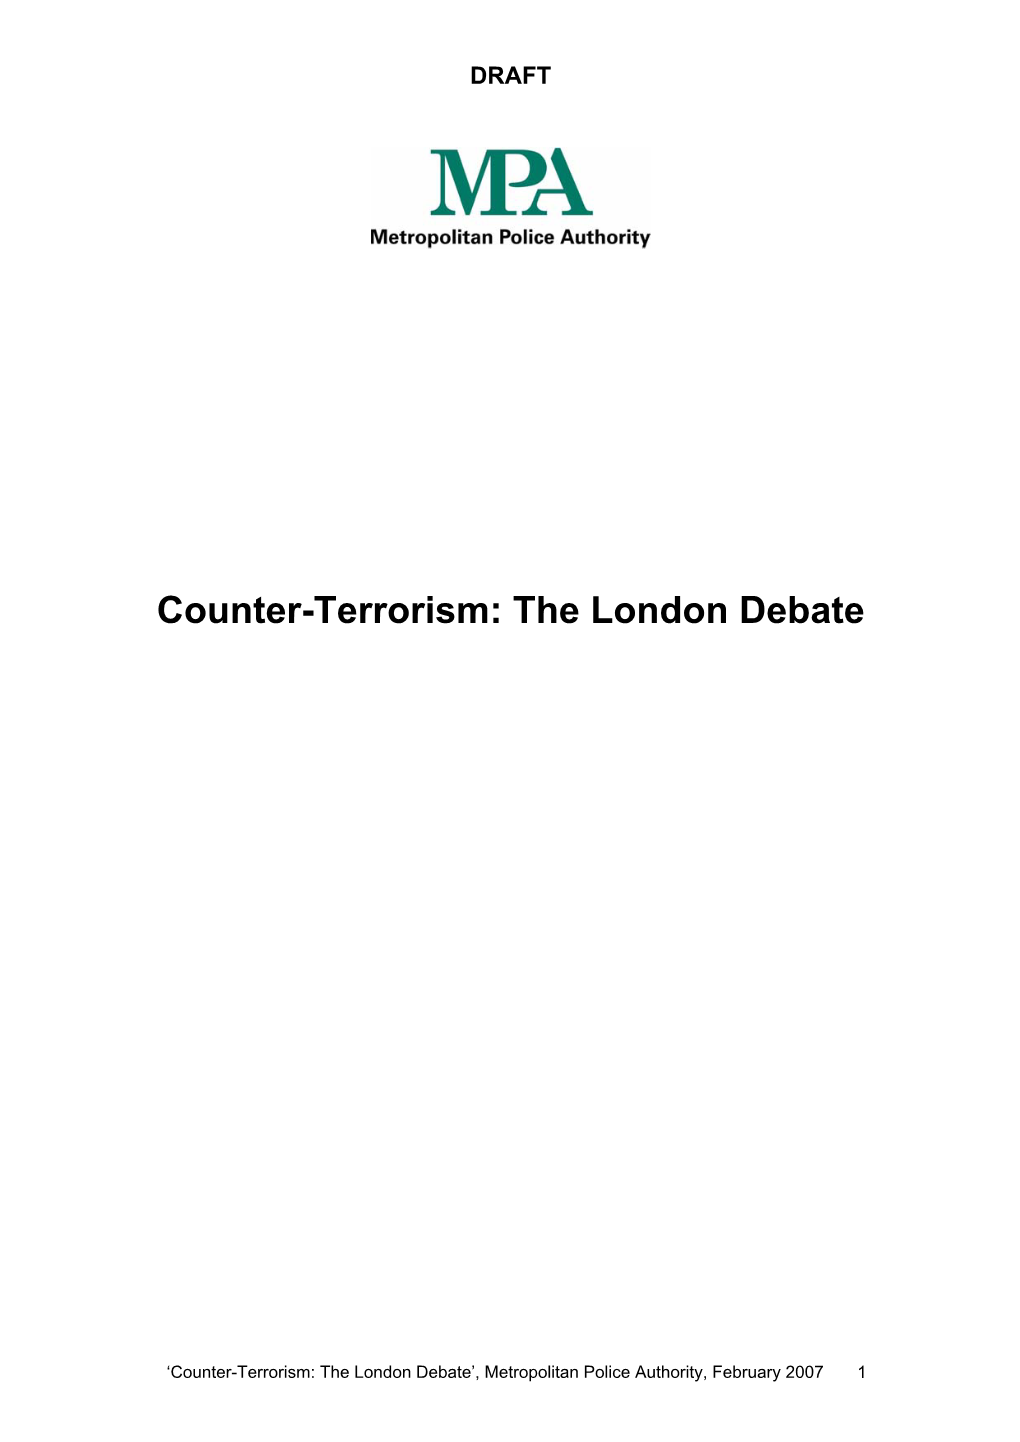 Counter-Terrorism: the London Debate